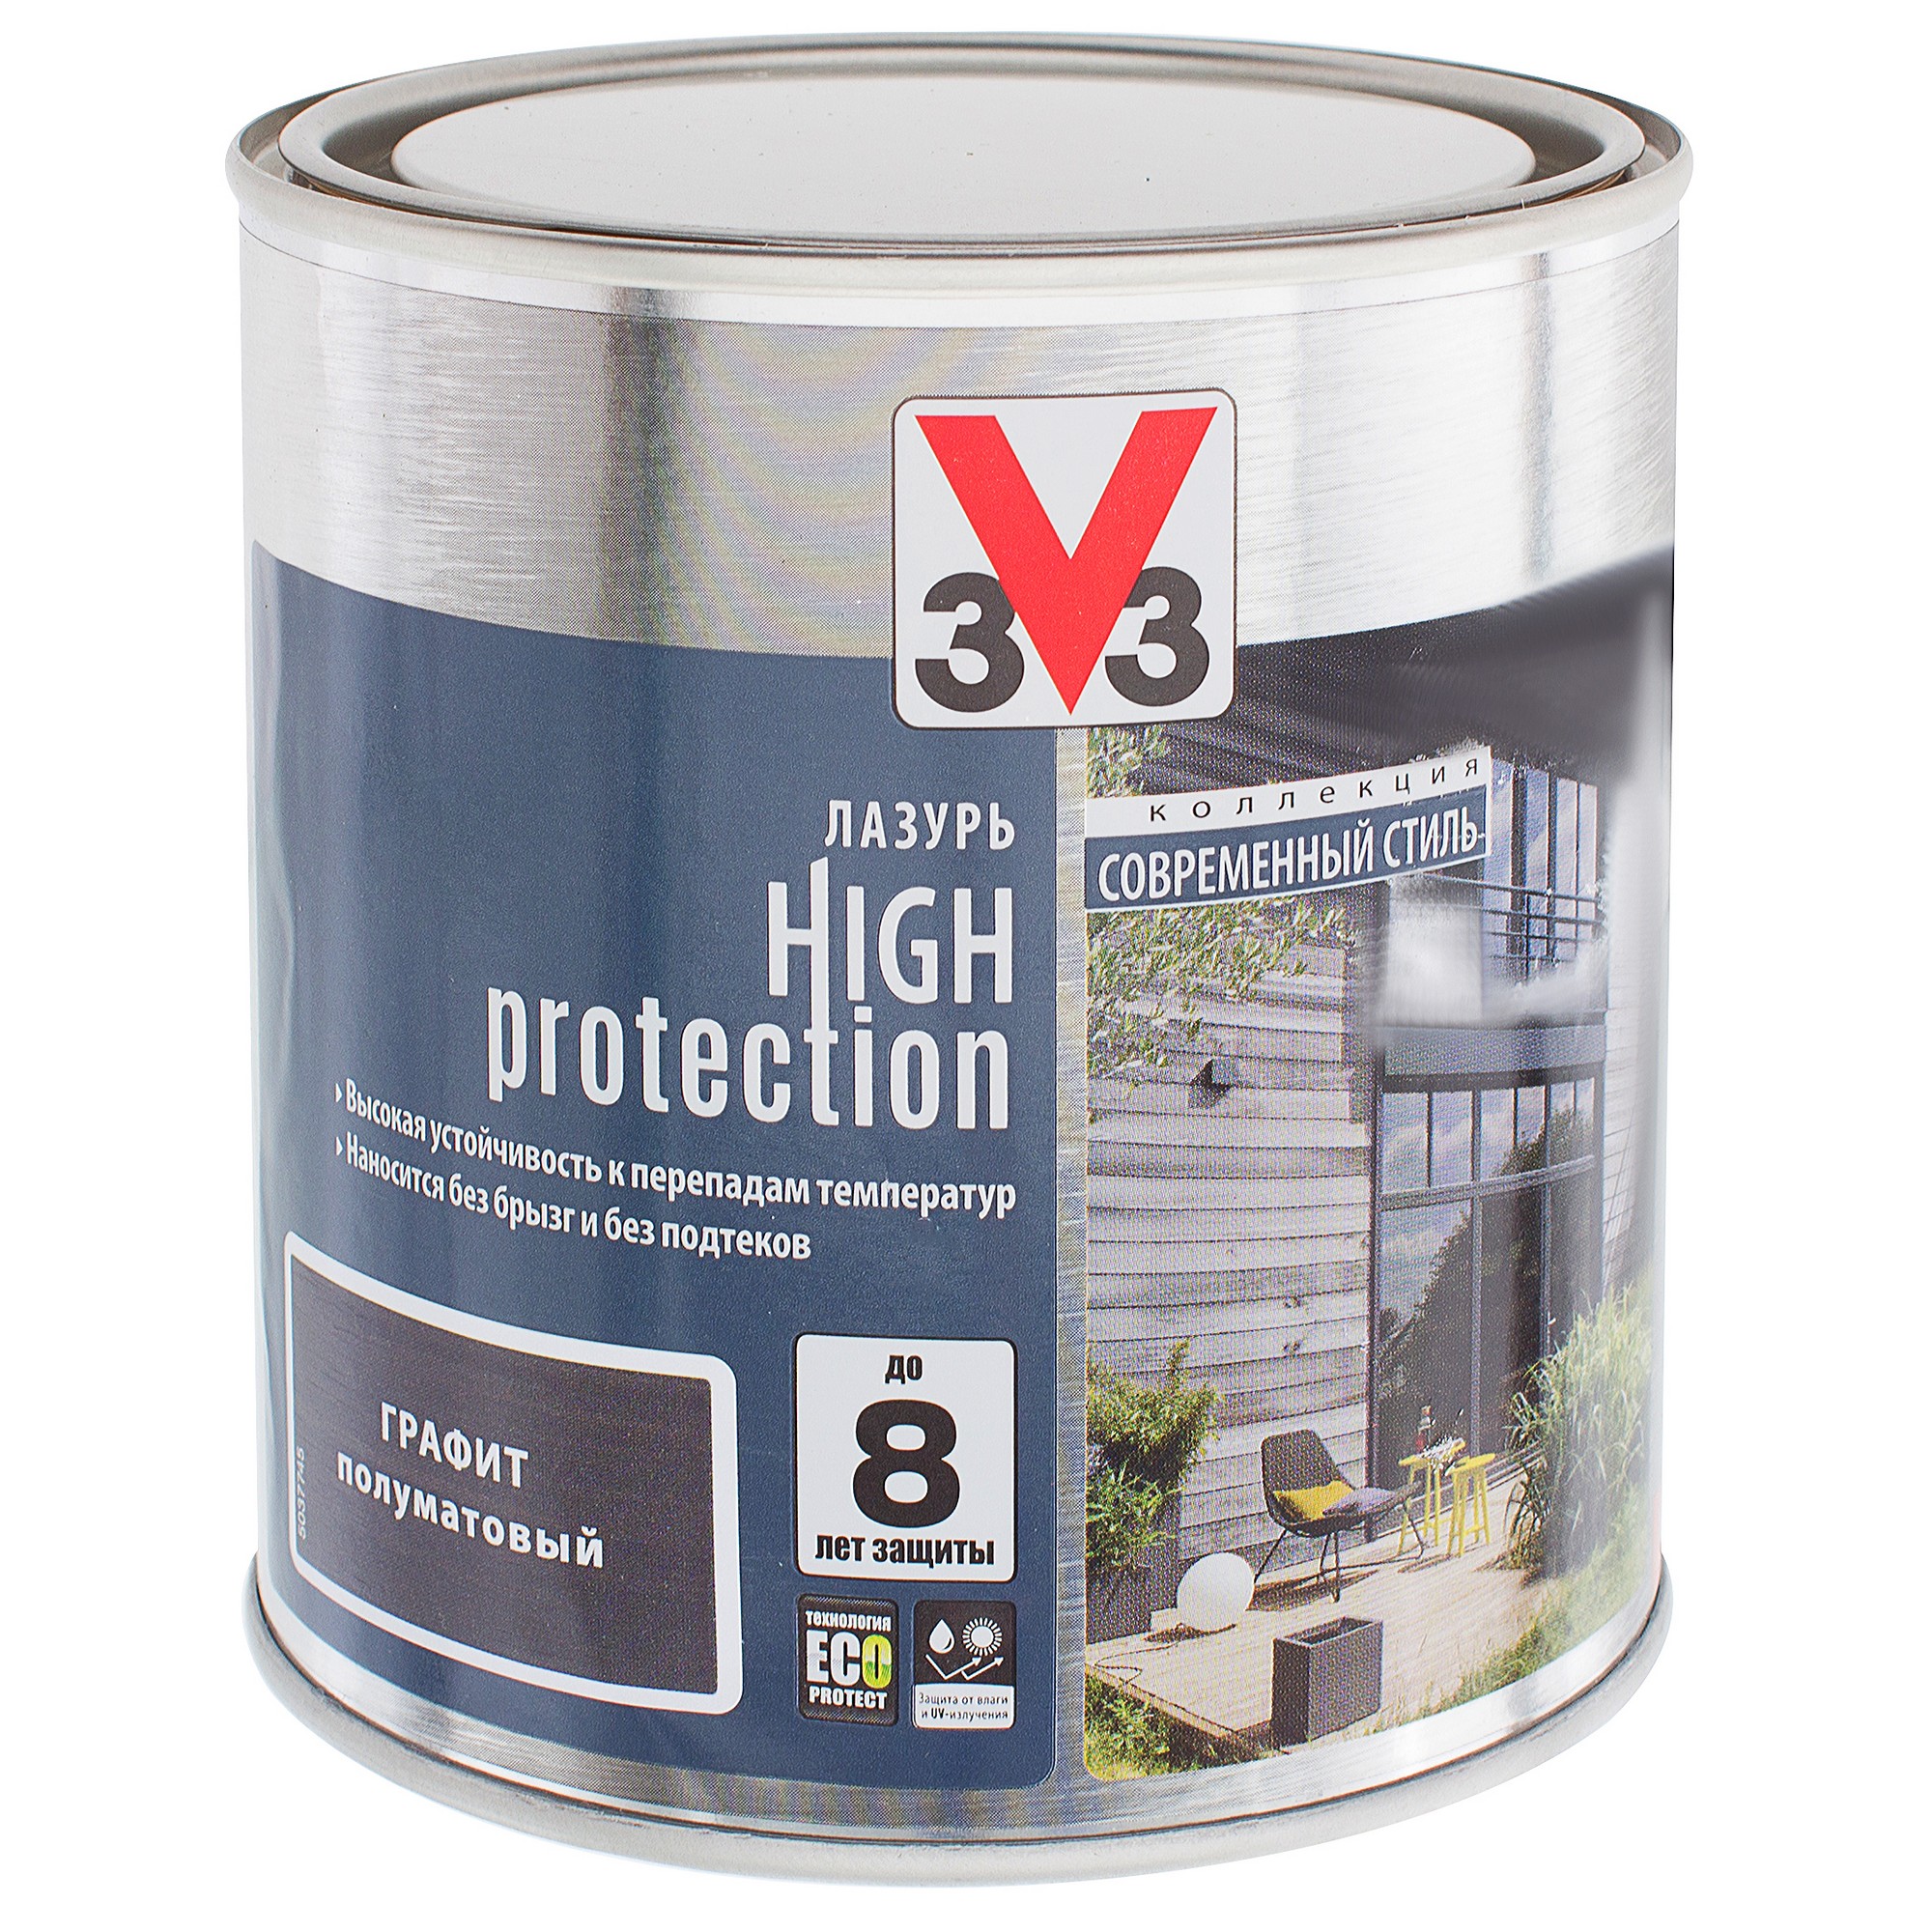 V33 High Protection графит